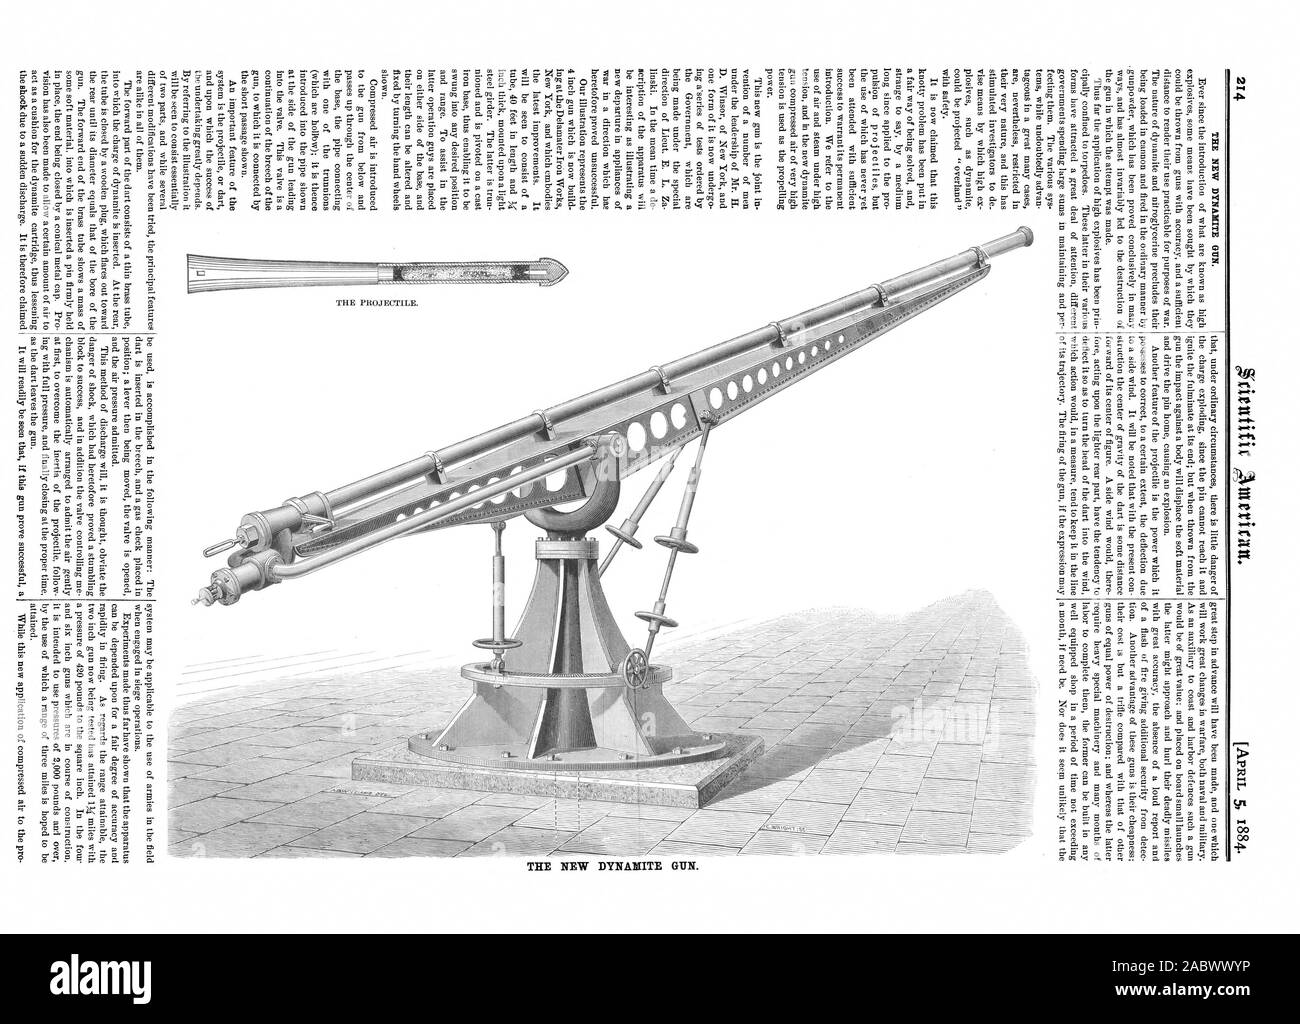 THE NEW DYNAMITE GUN. THE NEW DYNA, scientific american, 1884-04-05 Stock Photo